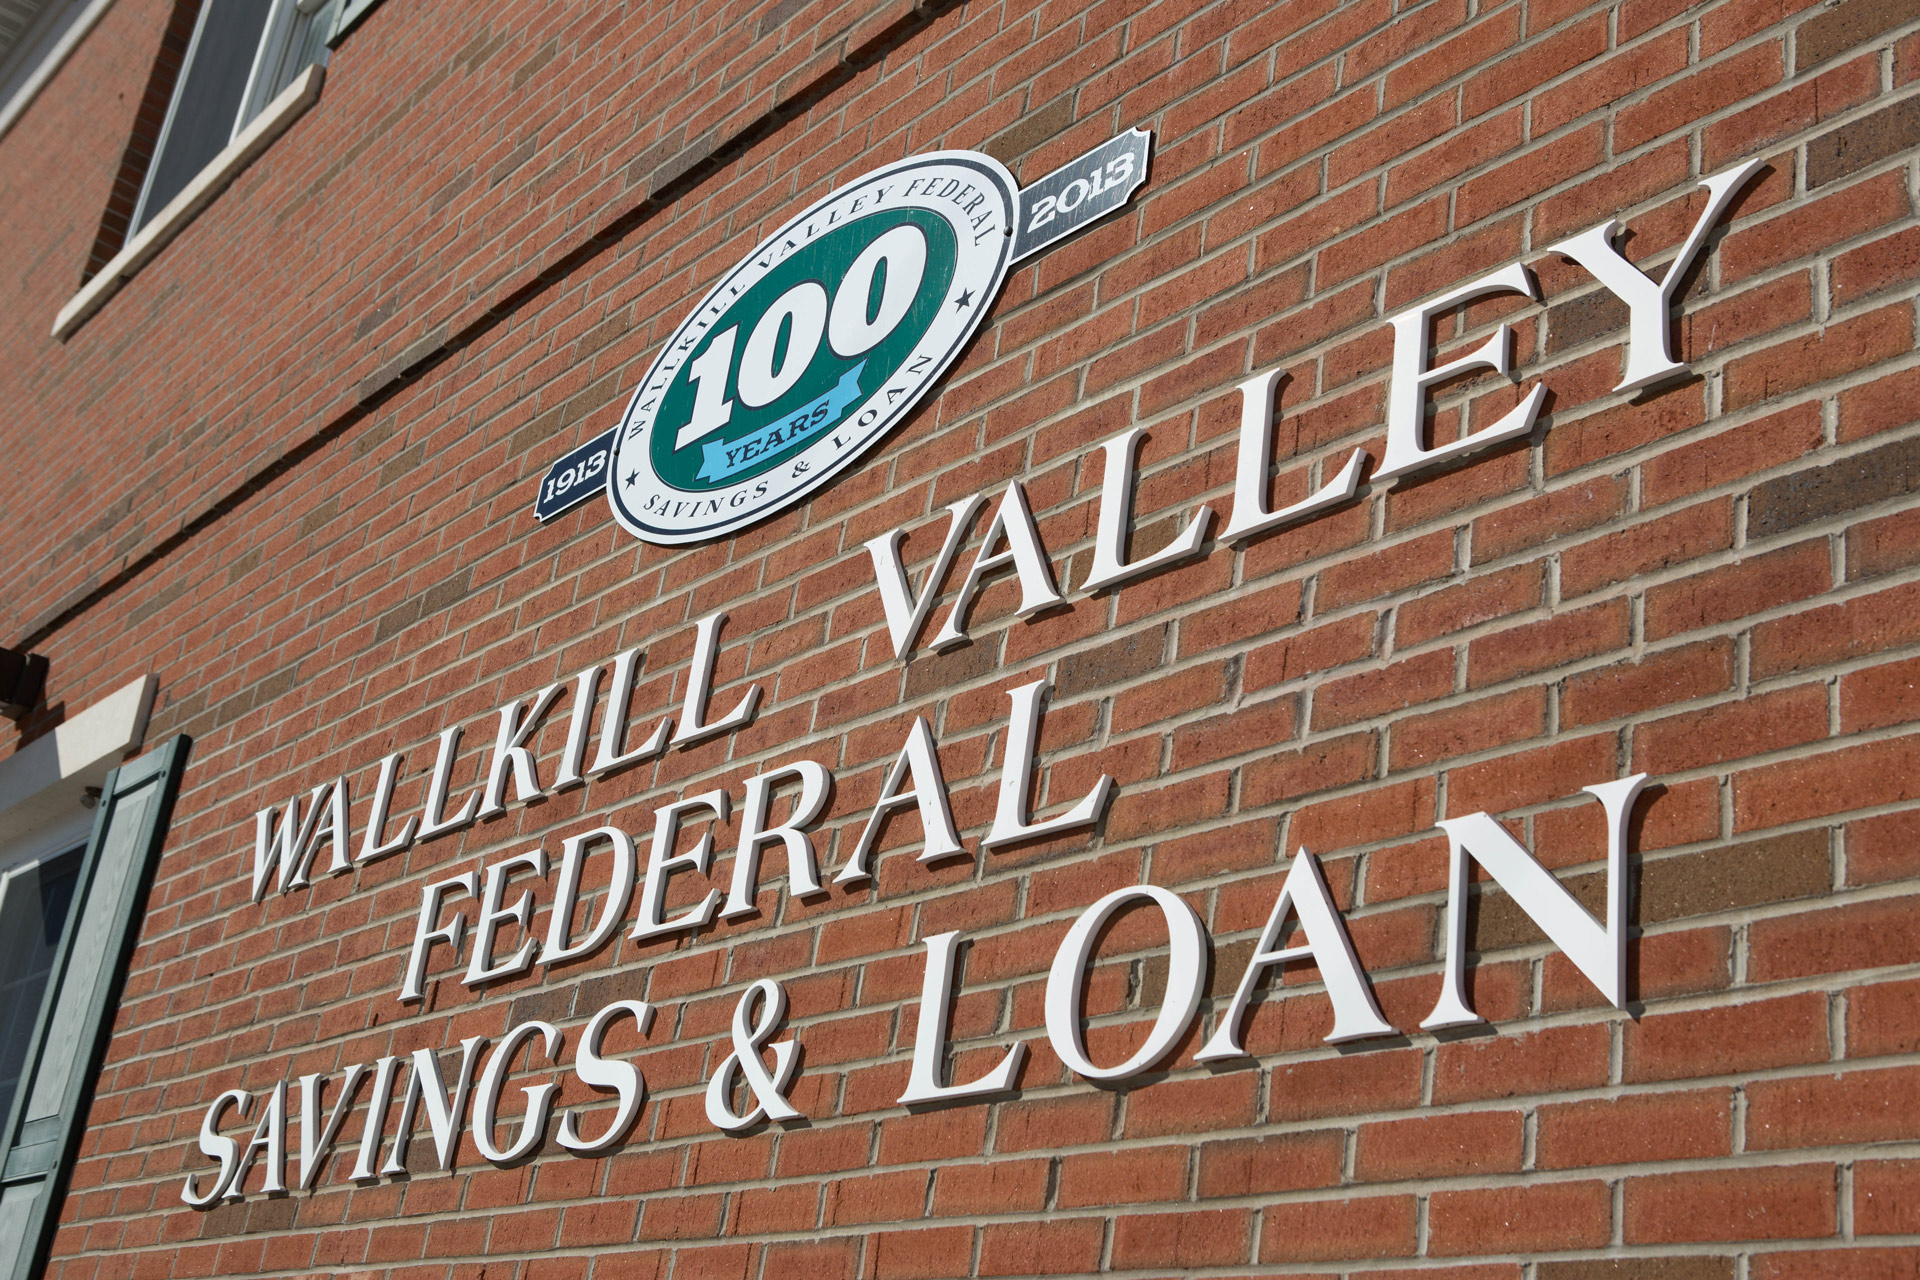 Wallkill Valley Federal Savings & Loan